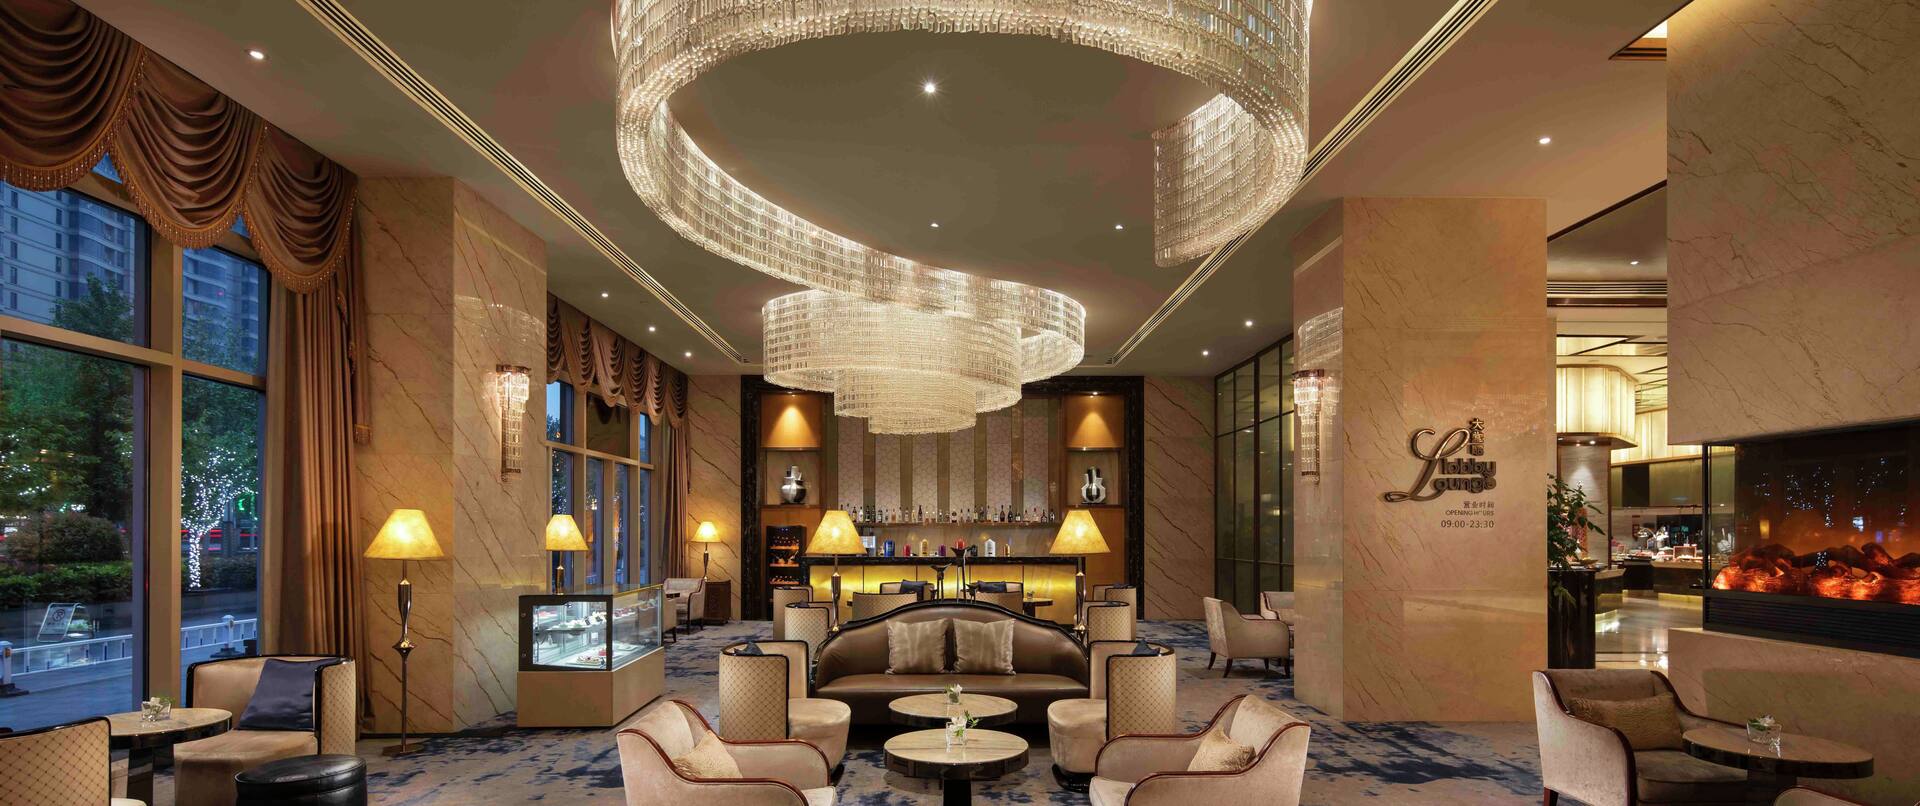 Hotel Lobby with Bar